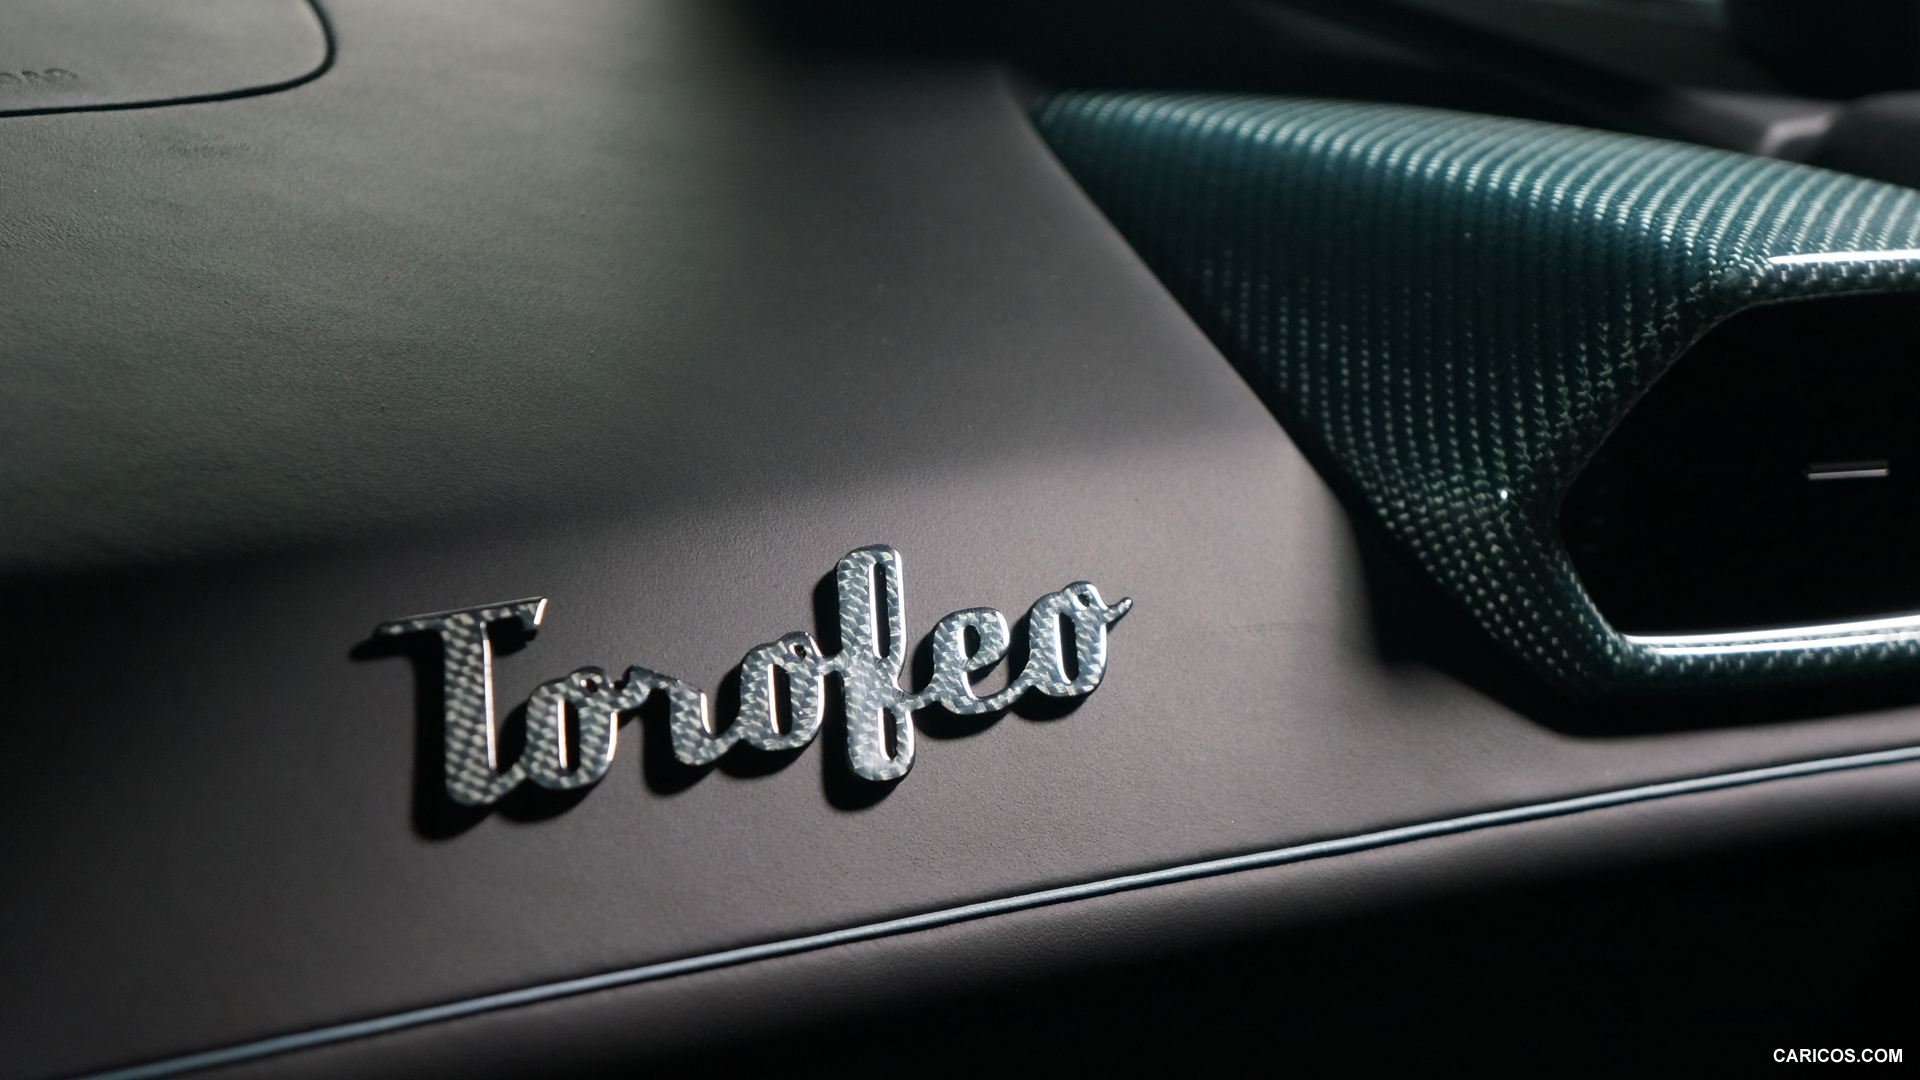 2015 Mansory Torofeo based on Lamborghini Huracan  - Interior Detail, #8 of 8